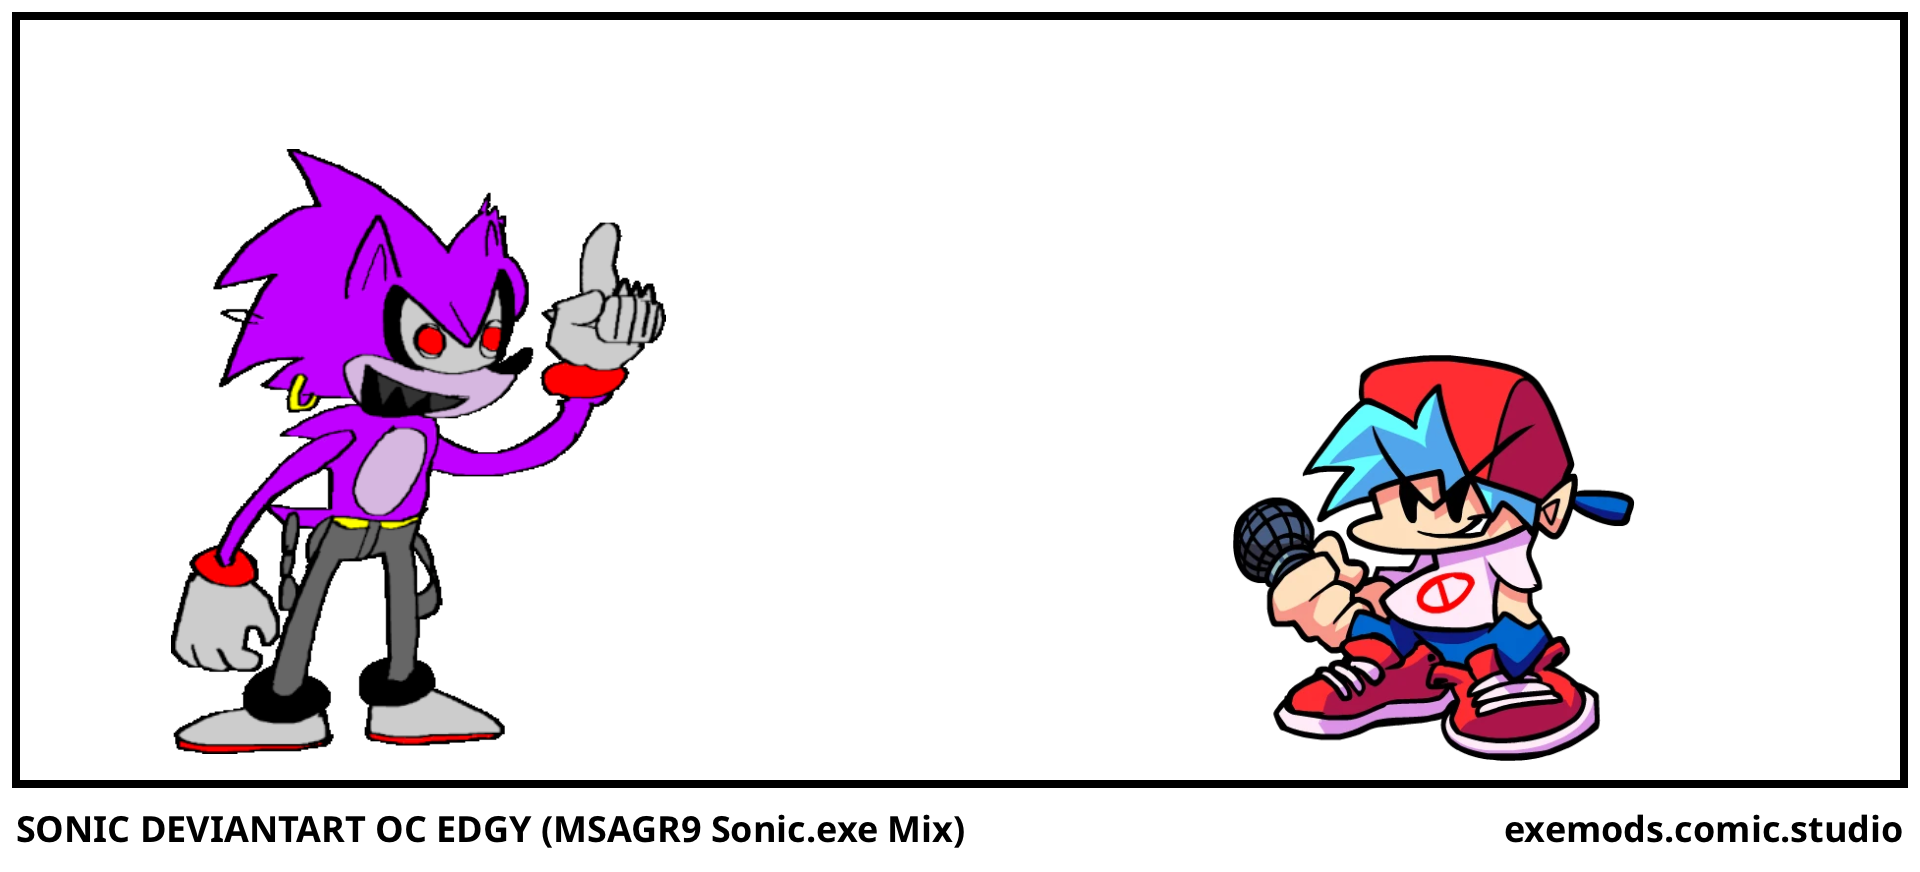 SONIC DEVIANTART OC EDGY (MSAGR9 Sonic.exe Mix) 